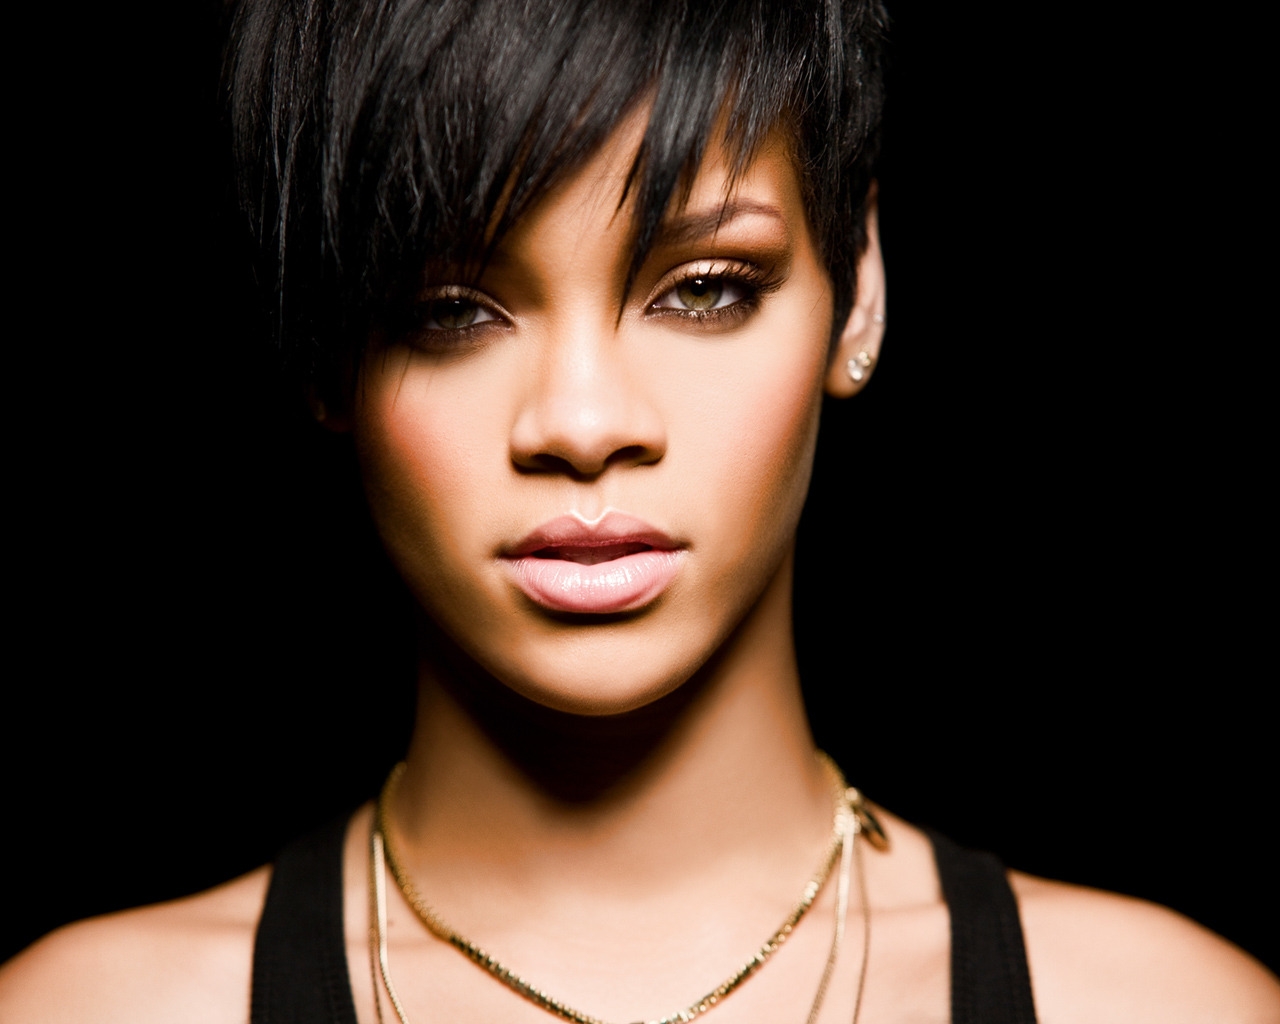 Rihanna for 1280 x 1024 resolution